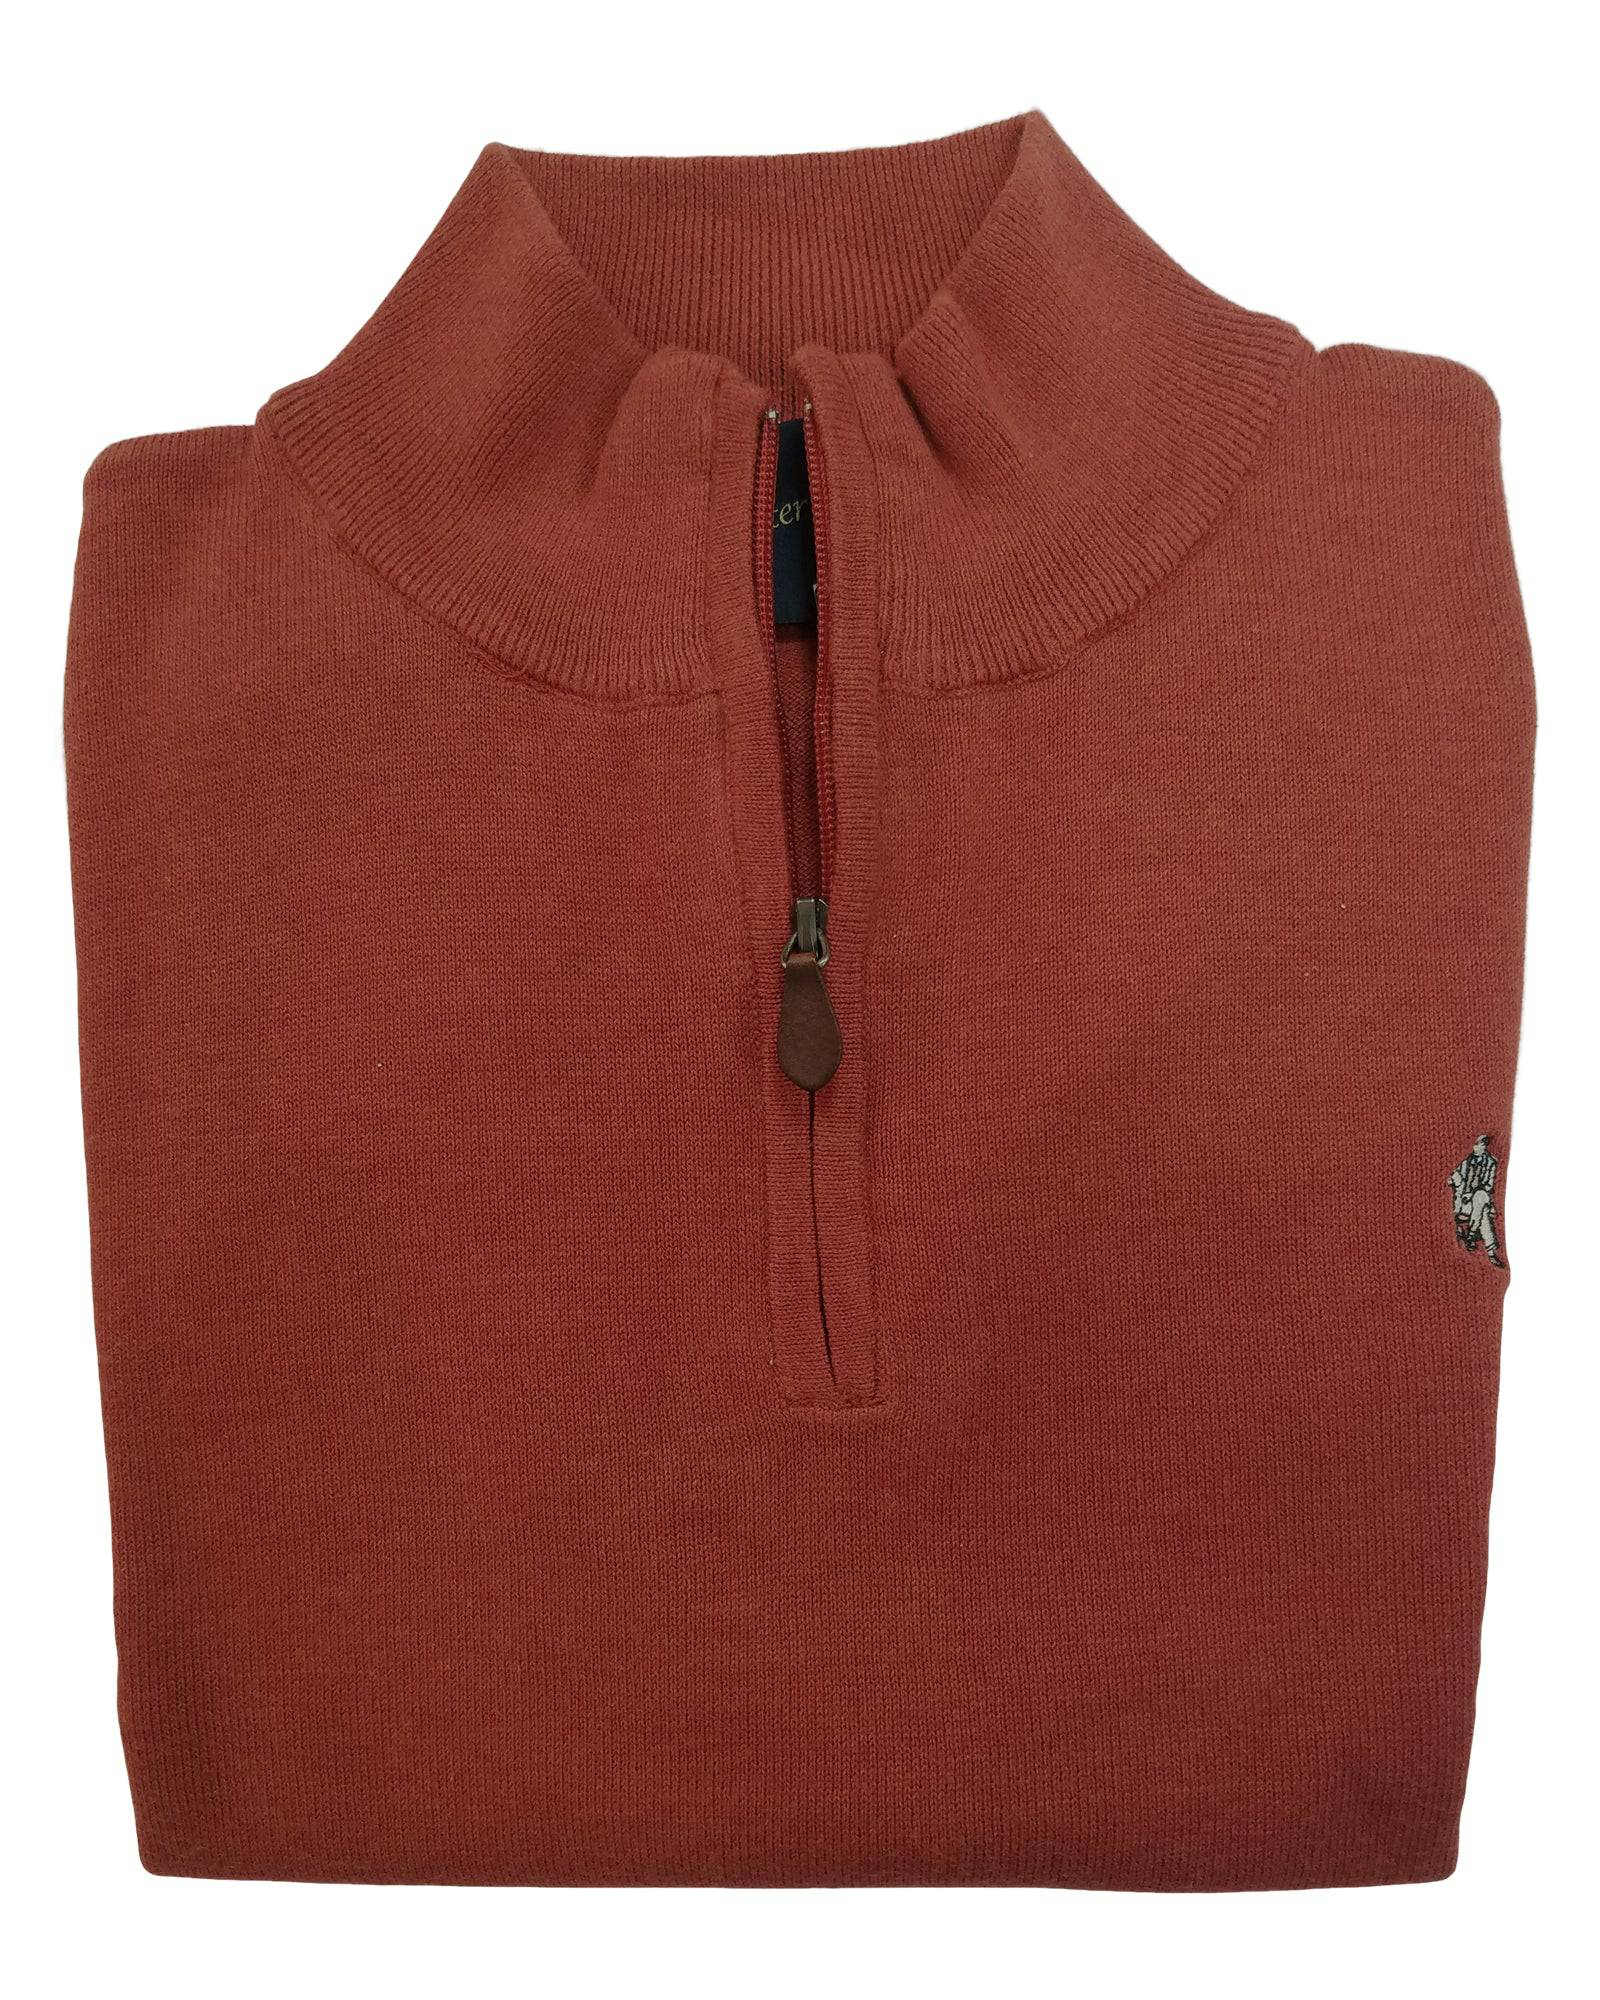 1/4 Zip Mock Sweater Vest in Orange Heather Cotton Blend